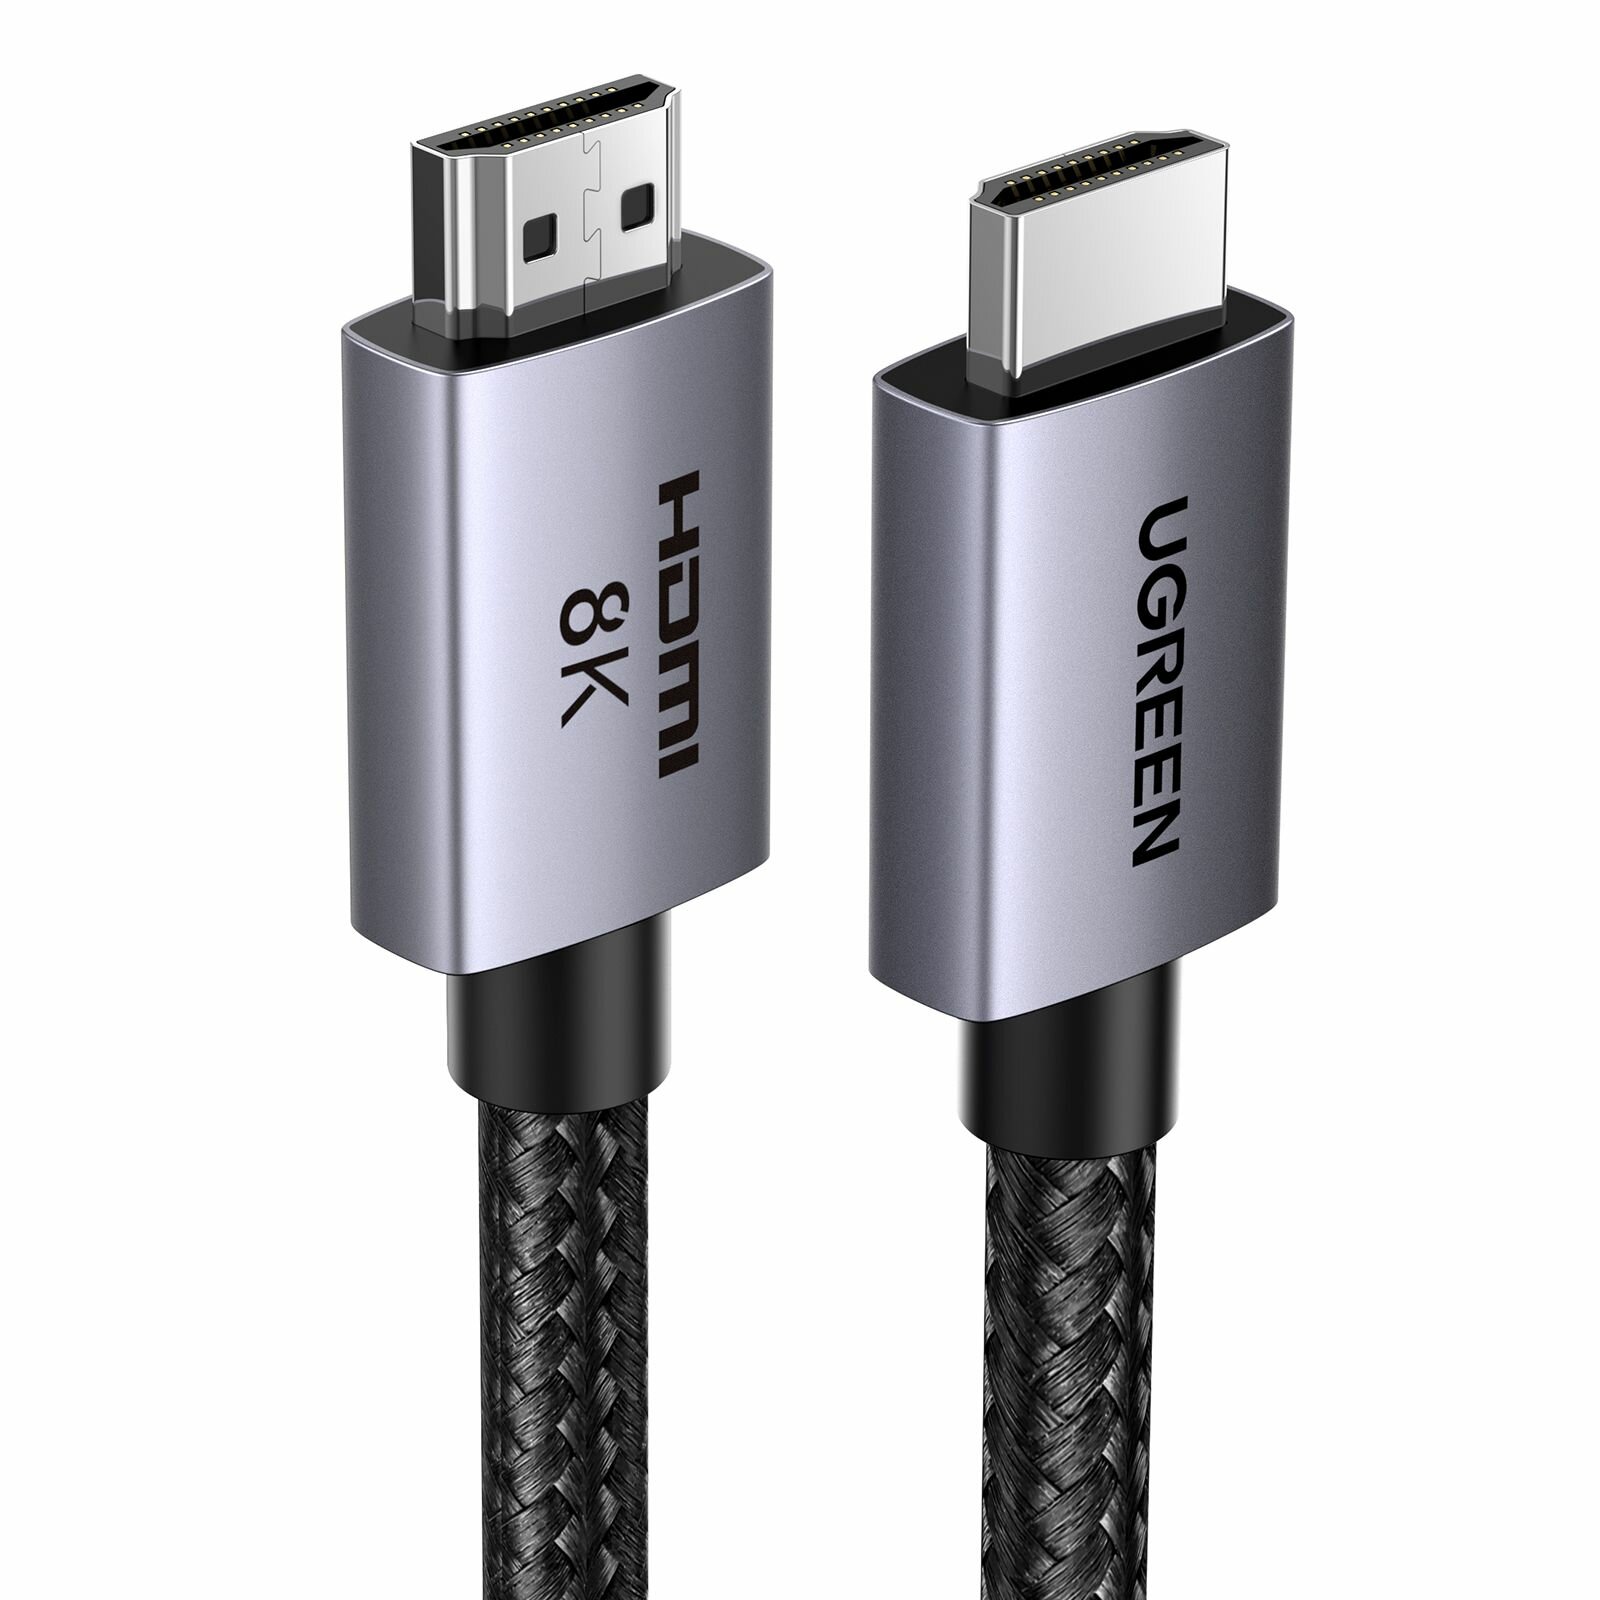 Кабель UGREEN HD171 (25908) HDMI 2.1 Male To Male 8K Cable. Длина: 1м. Цвет: серый